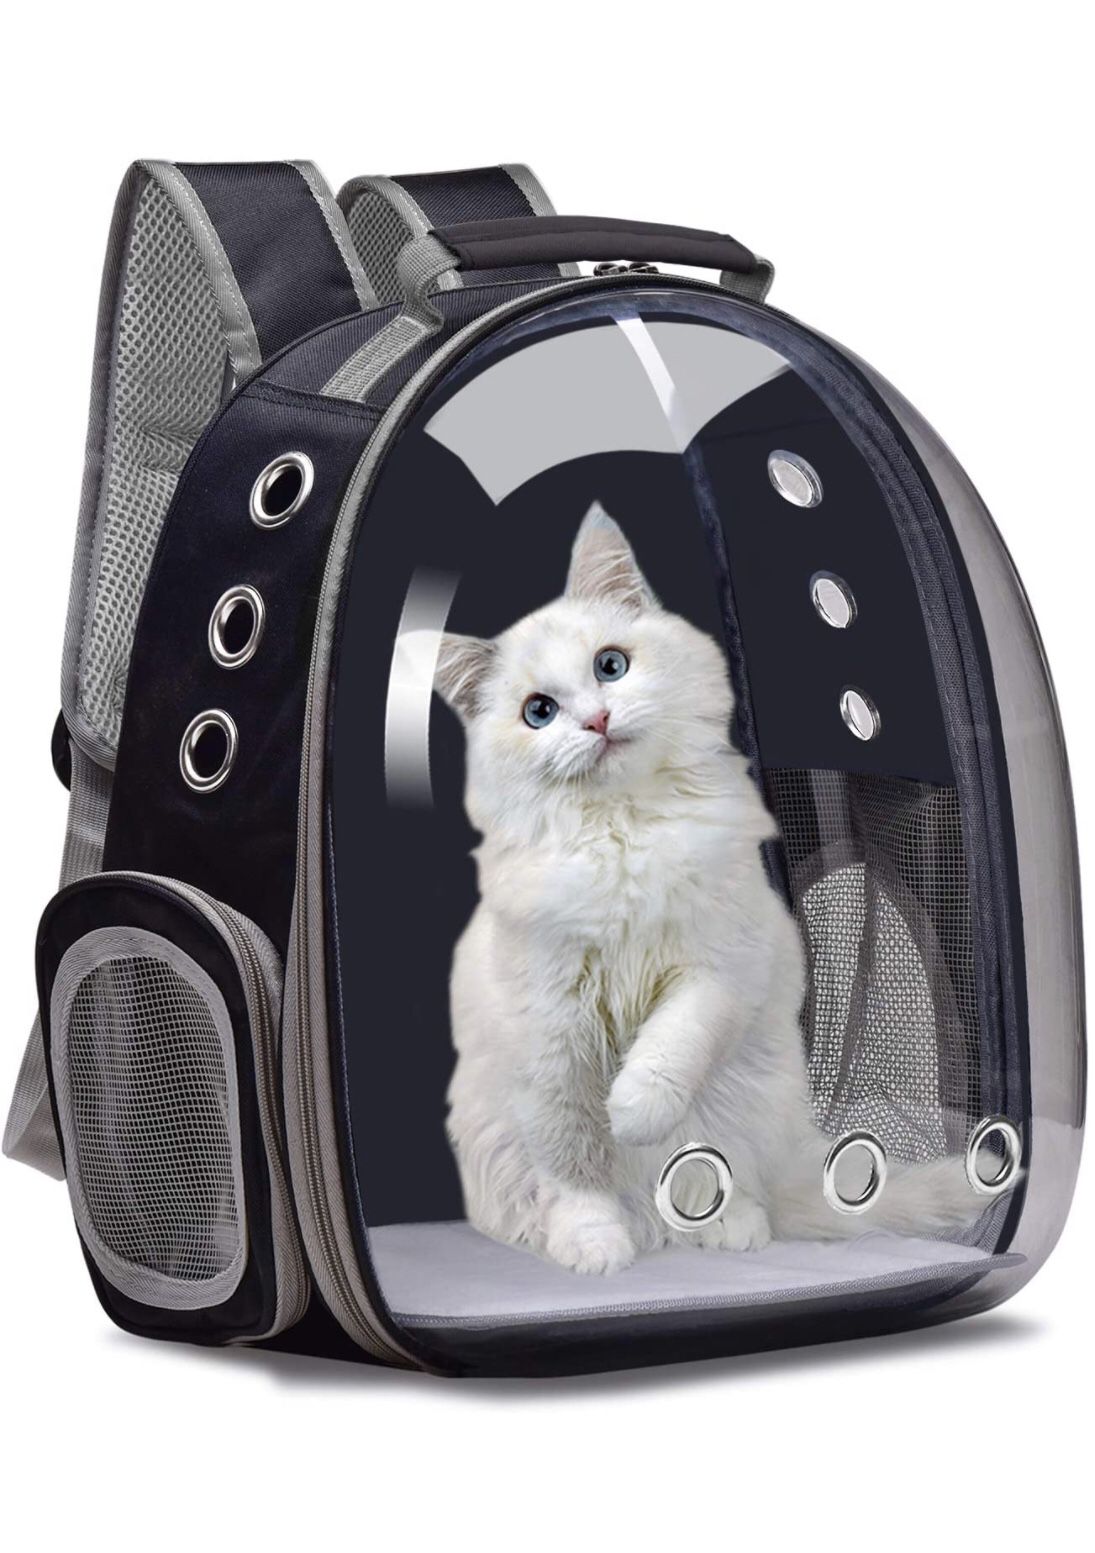 Cat’s Travel Carrier